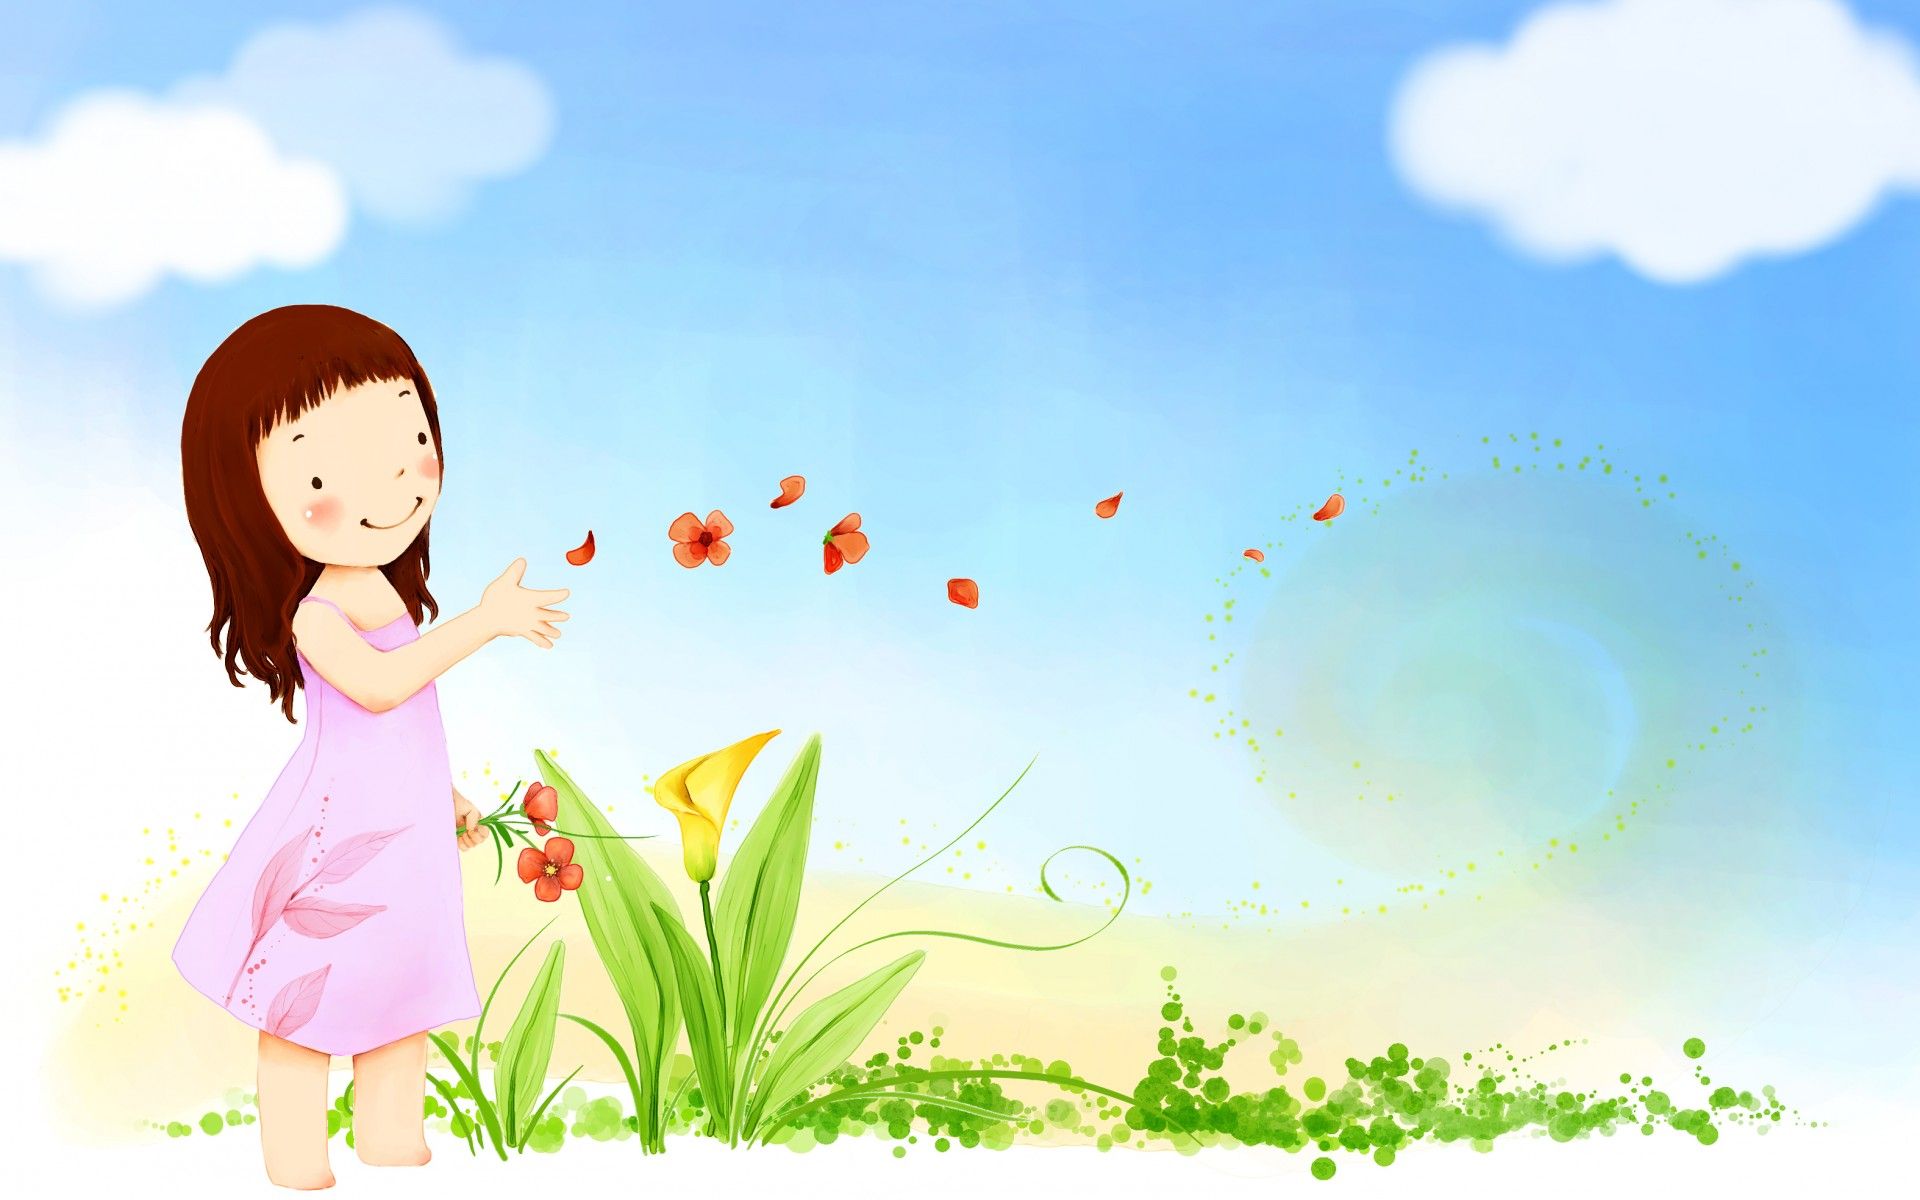 Wallpaper, 1920x1200 px, butterfly, children, clouds, cute, flowers, girl, happy, mood, sky, summer, vector 1920x1200